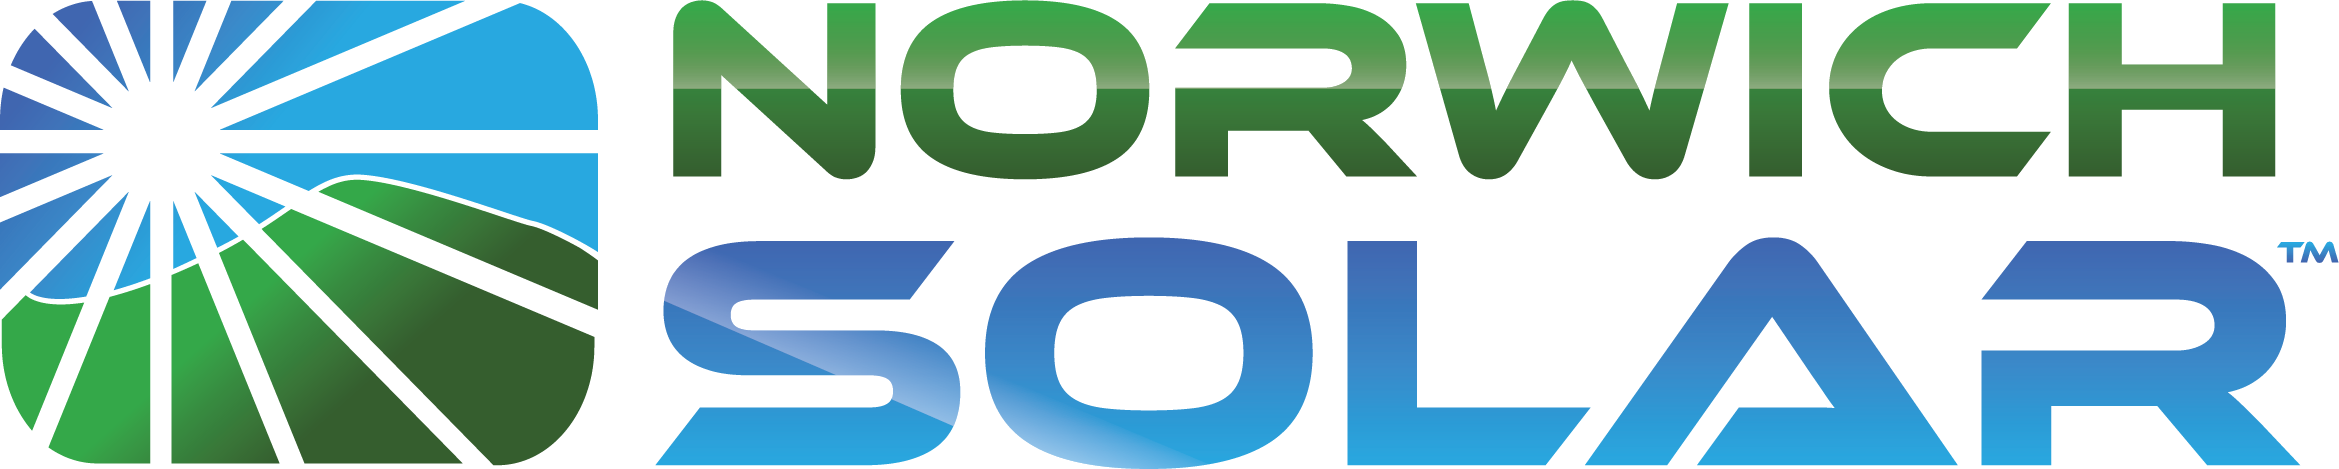 Norwich Solar logo